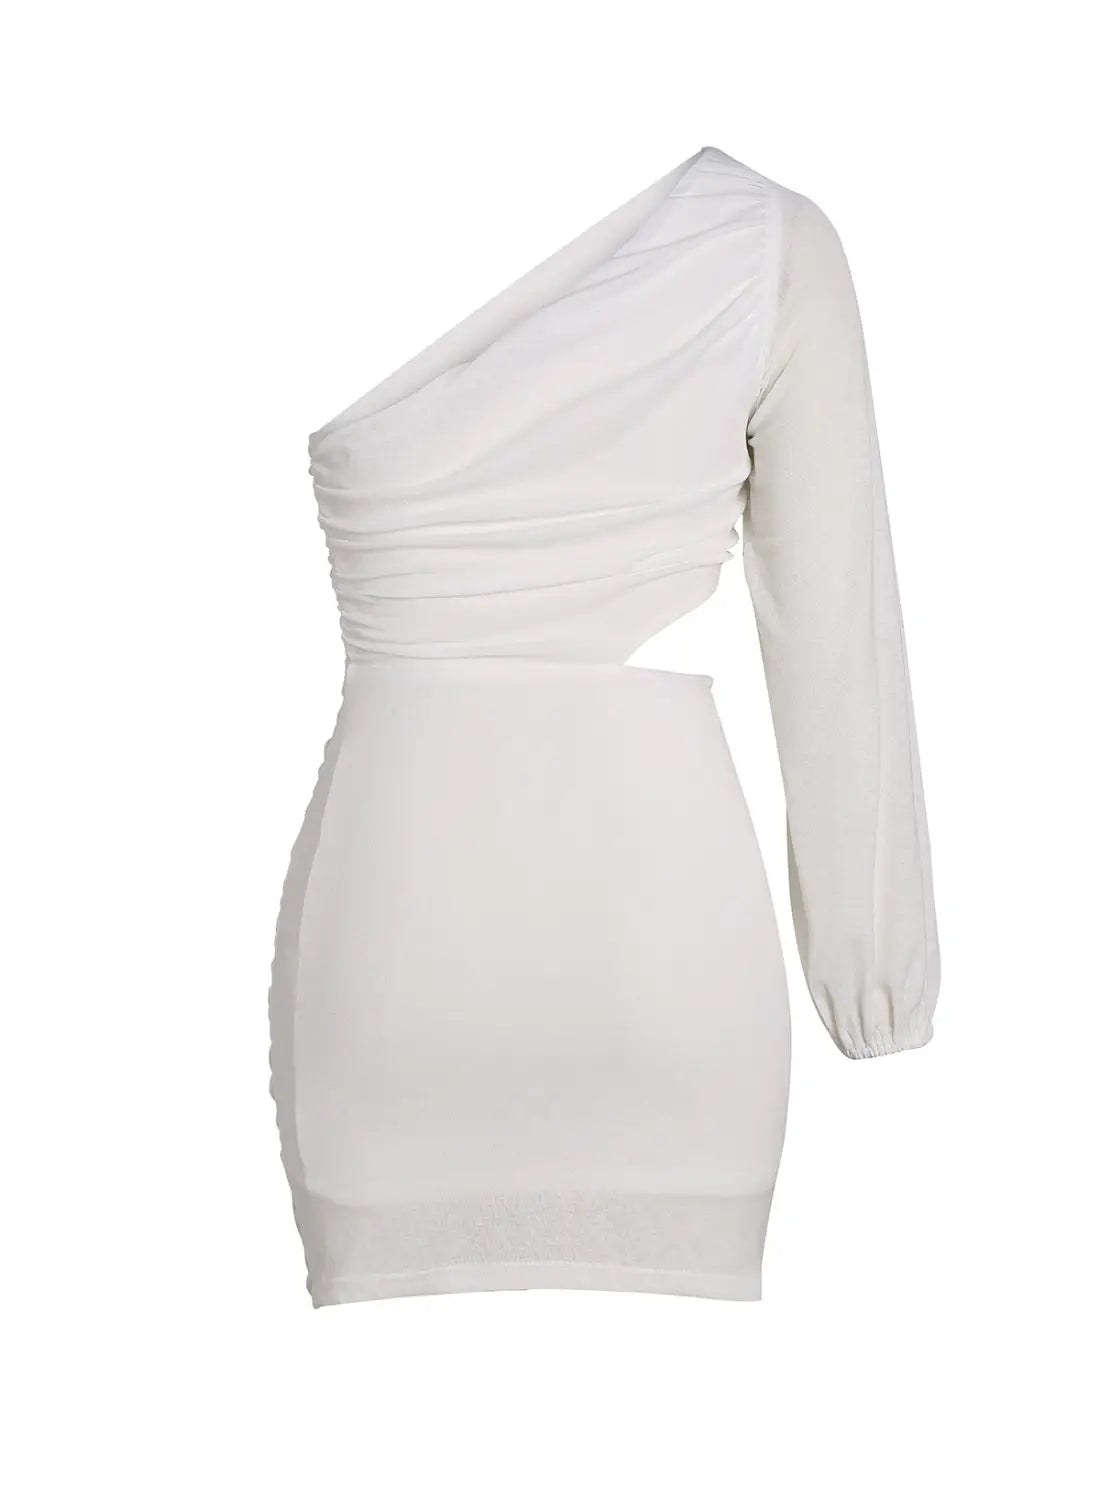 White asymmetric one shoulder cutout bodycon dress - dresses